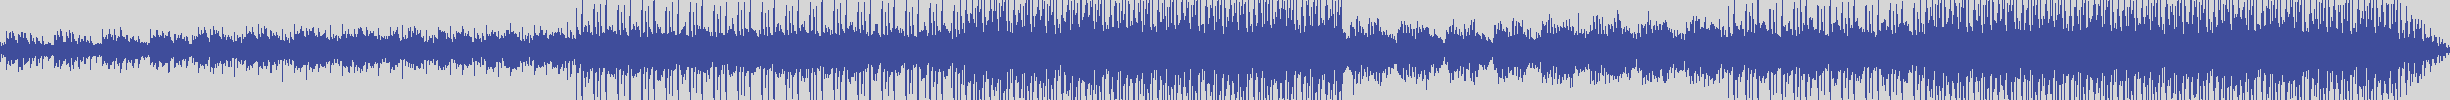 noclouds_chillout [NOC128] Stenwood Age - Spy Tramp [Original Mix] audio wave form